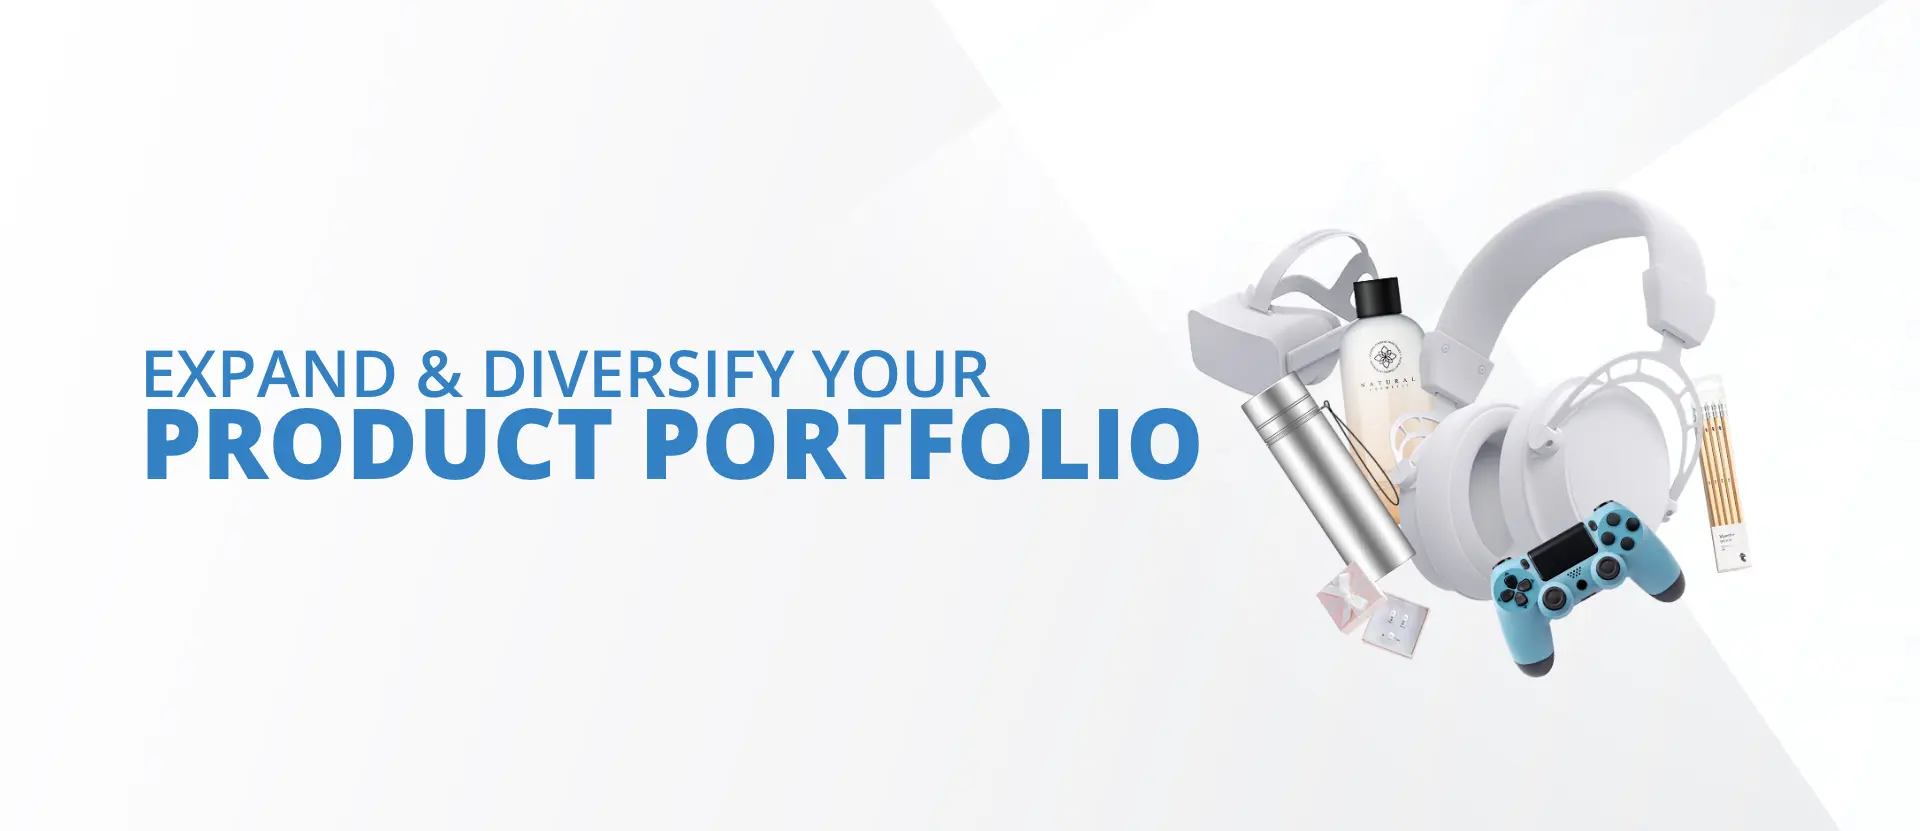 Expand & diversify your product portfolio